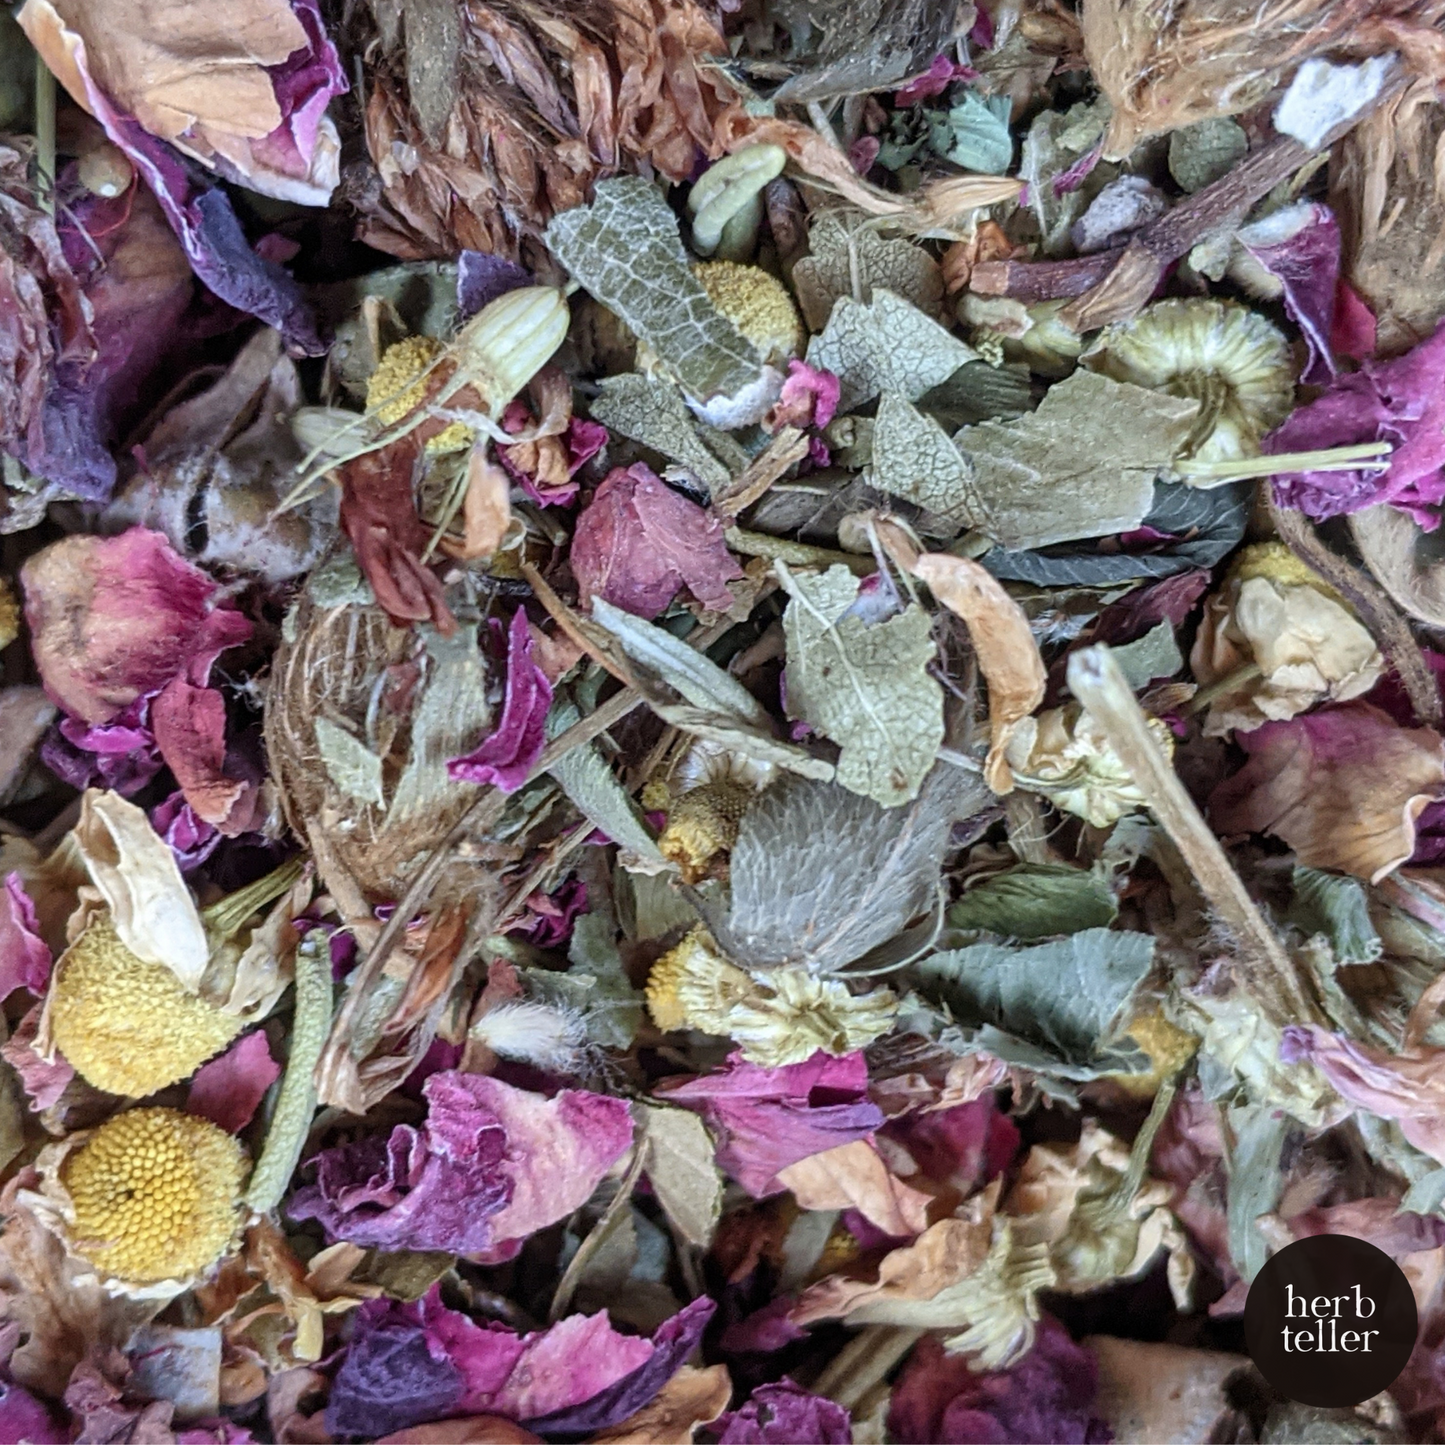 Brigid's Brew Herbal Tea/Infusion